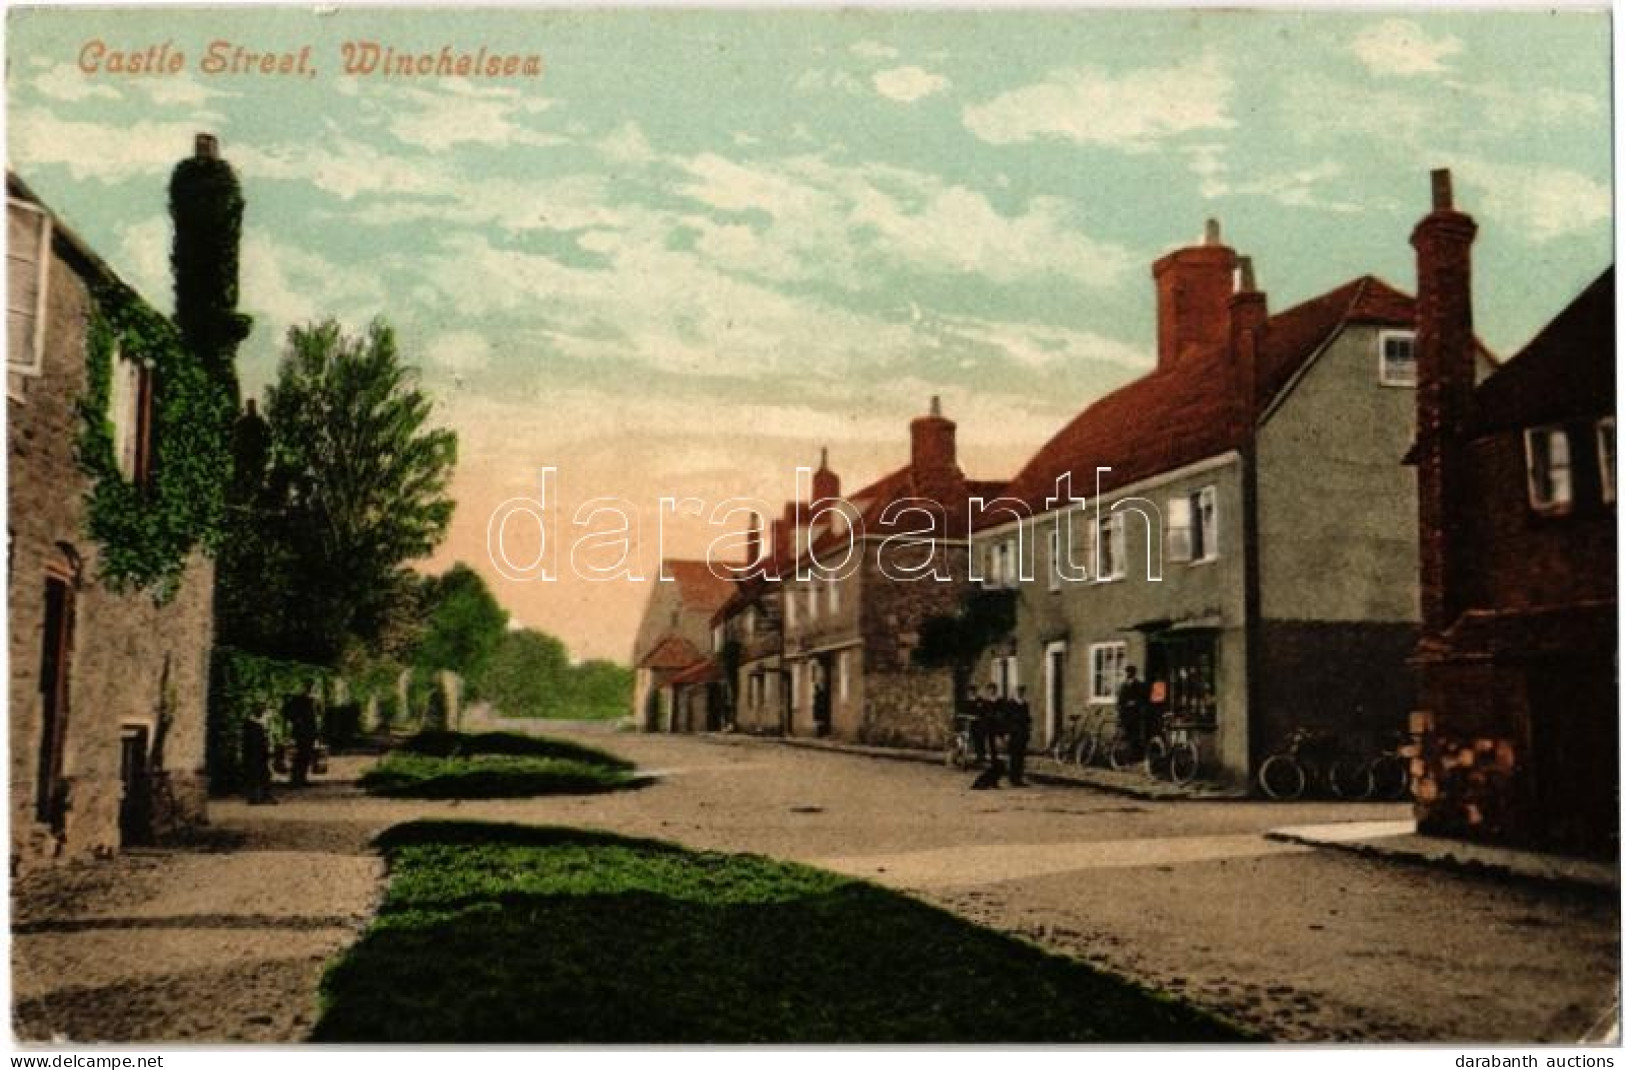 T2 Winchelsea, Castle Street , Shop, Bicycles - Unclassified